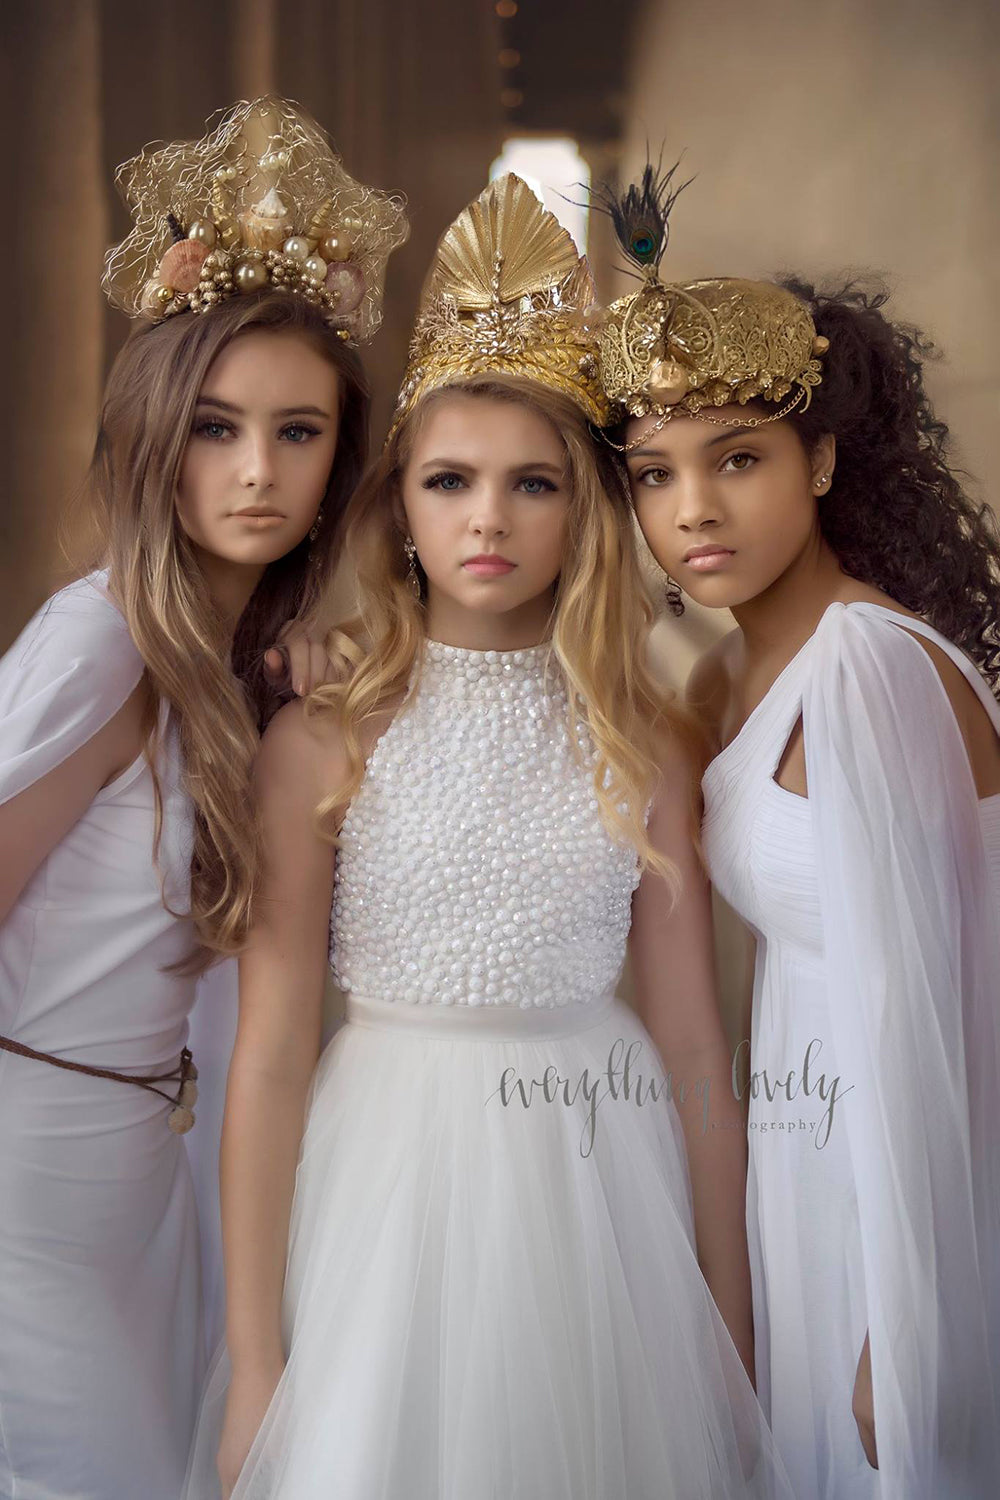 Hera Greek Goddess Marriage Queen Couture Headpiece - Honeydrops Designs